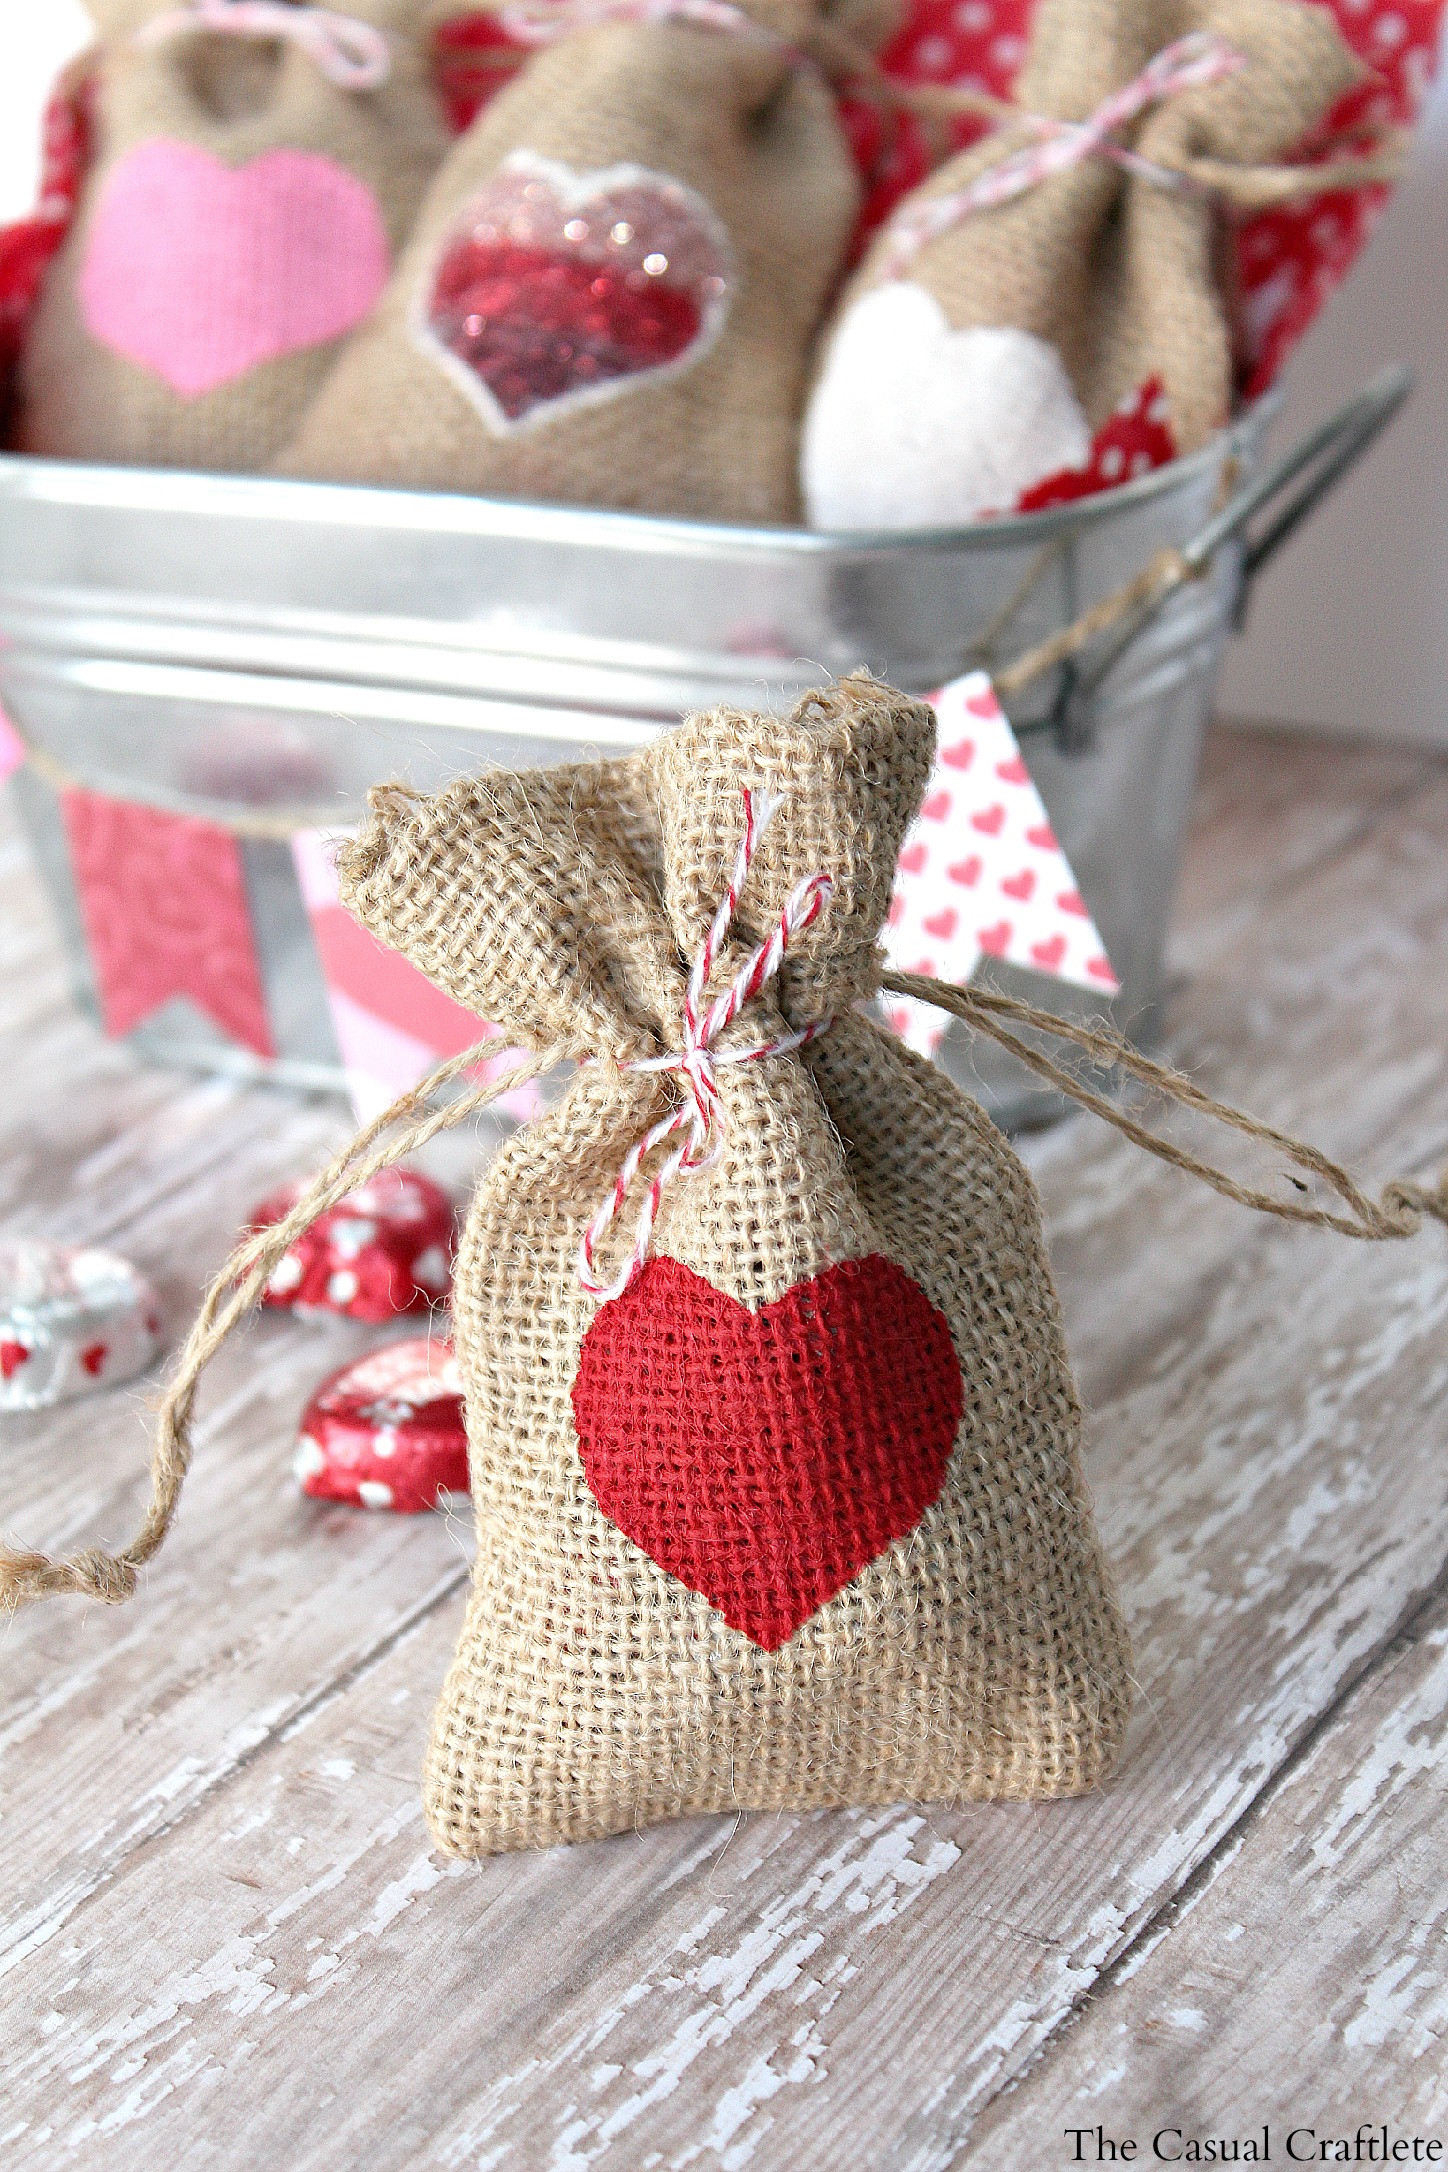 Valentines Gift Ideas Diy
 DIY Valentine s Day Burlap Gift Bags